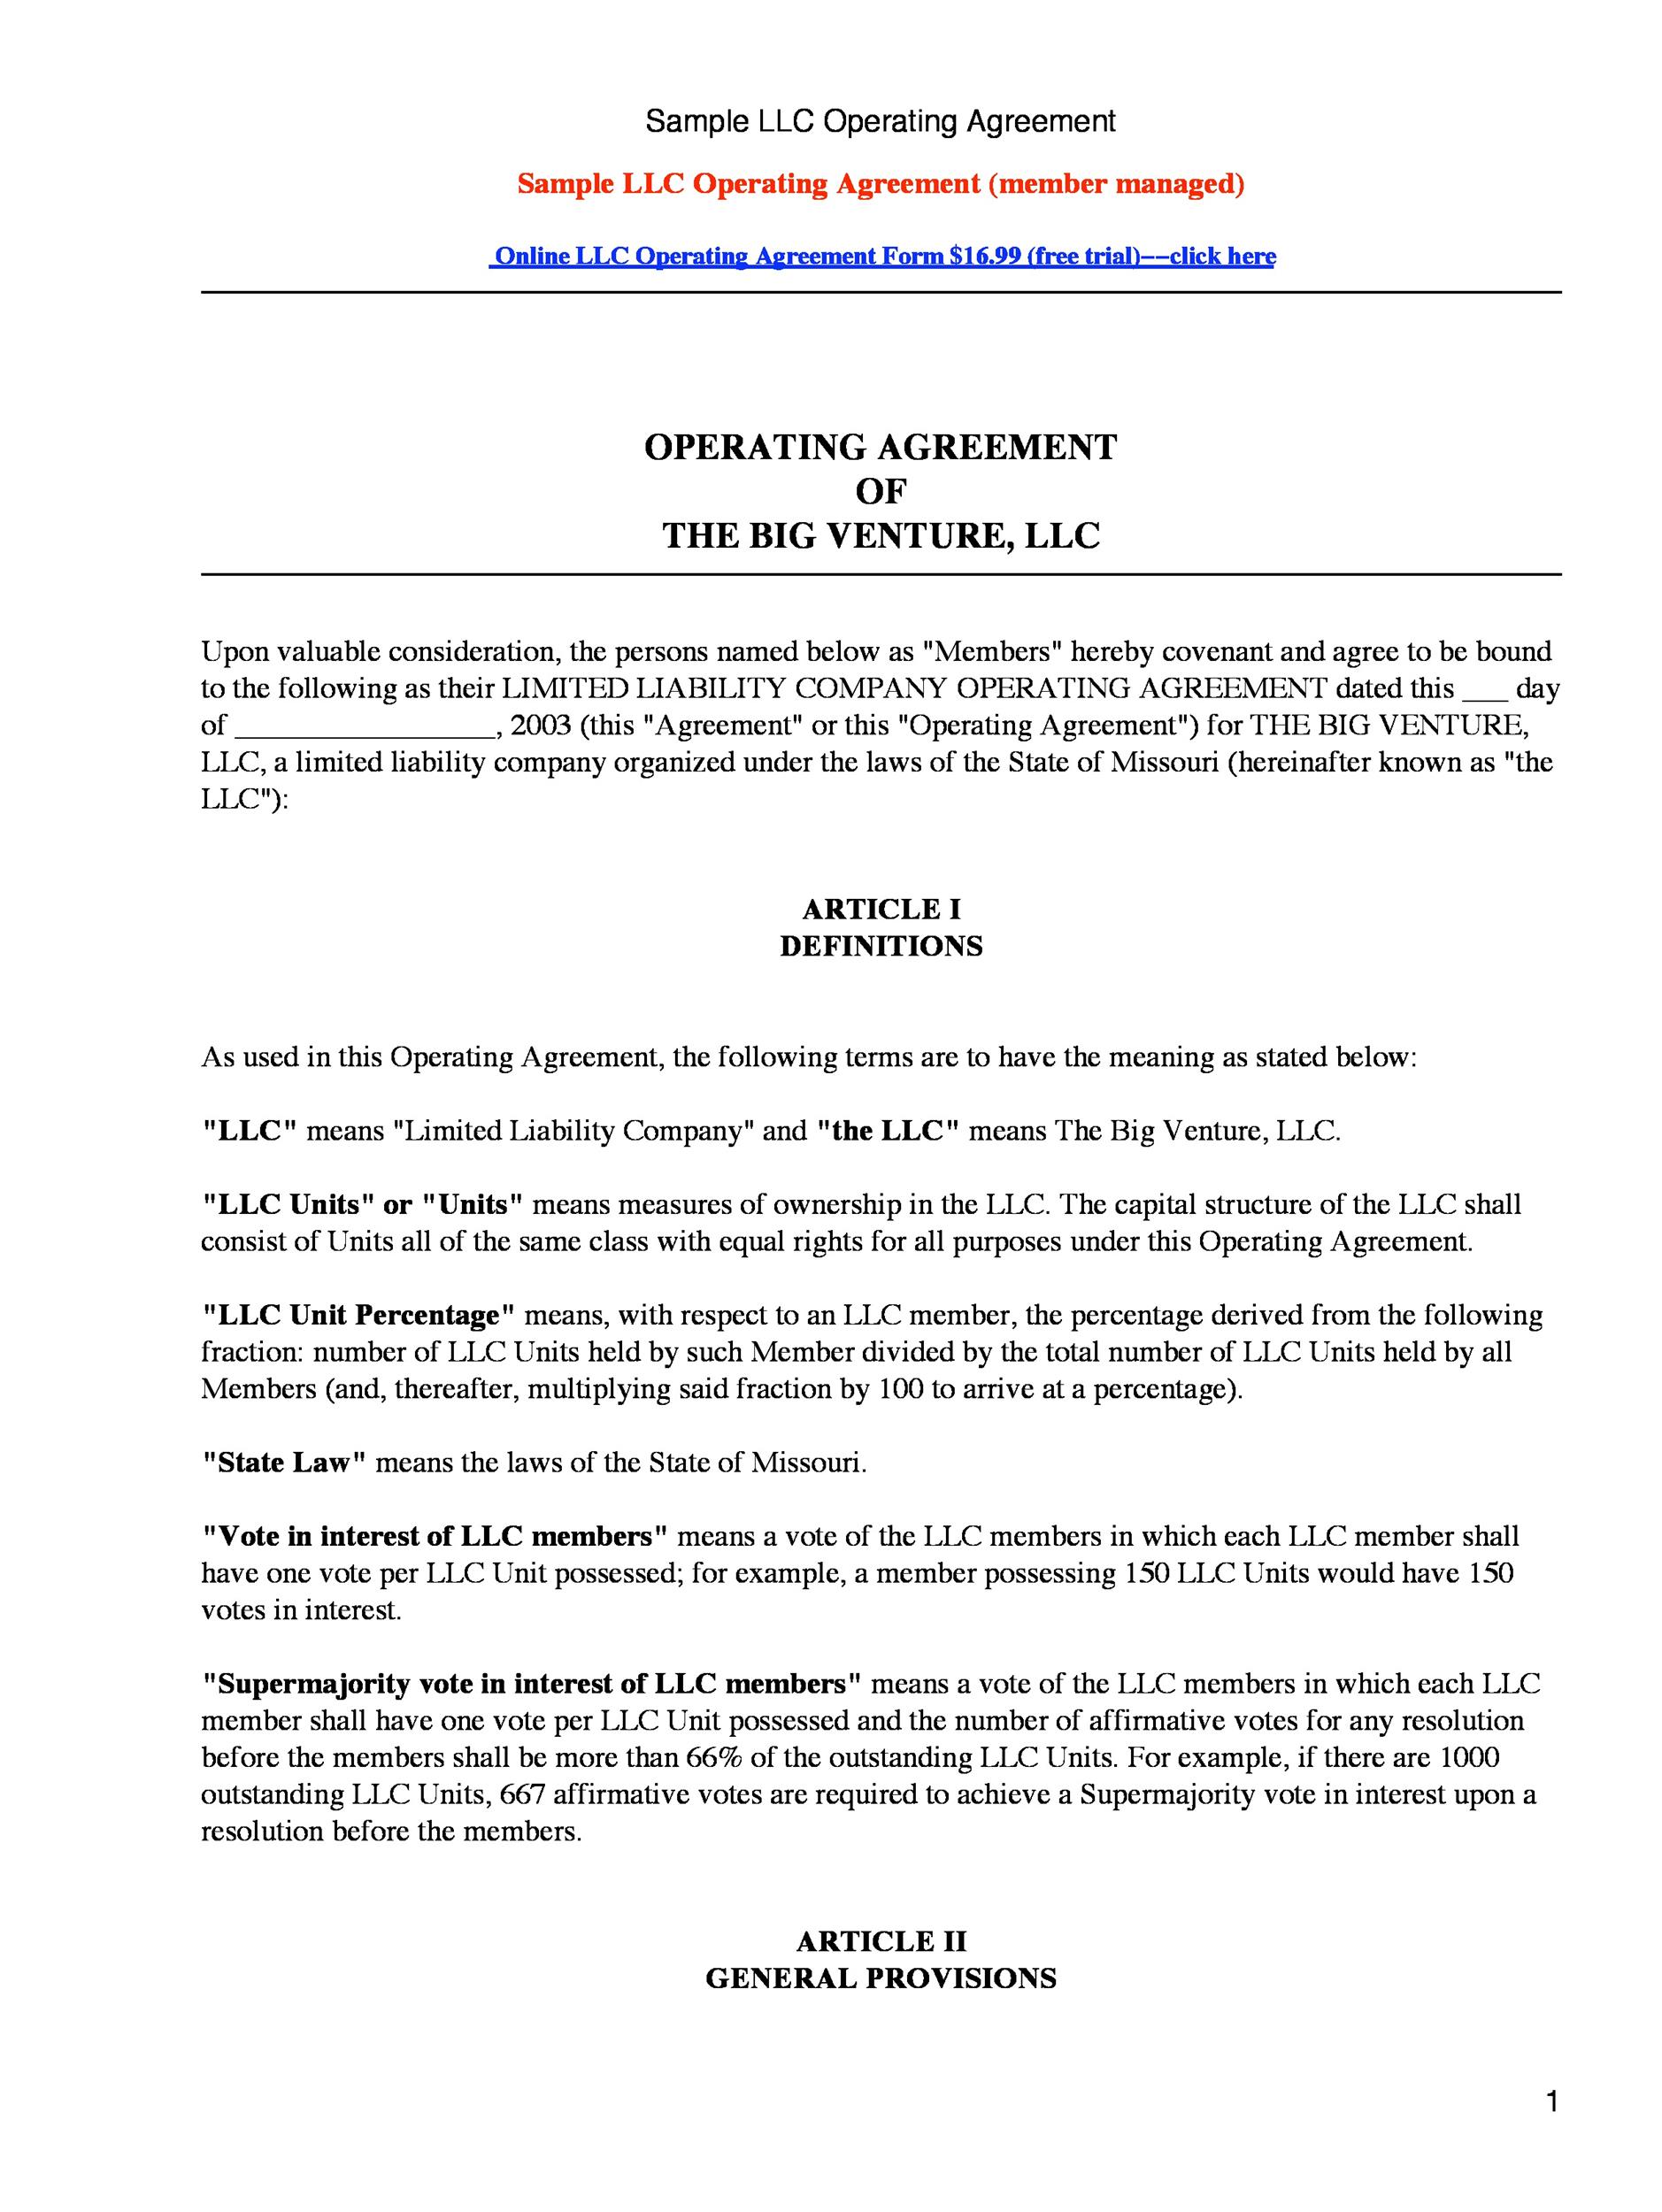 30 Professional LLC Operating Agreement Templates TemplateLab